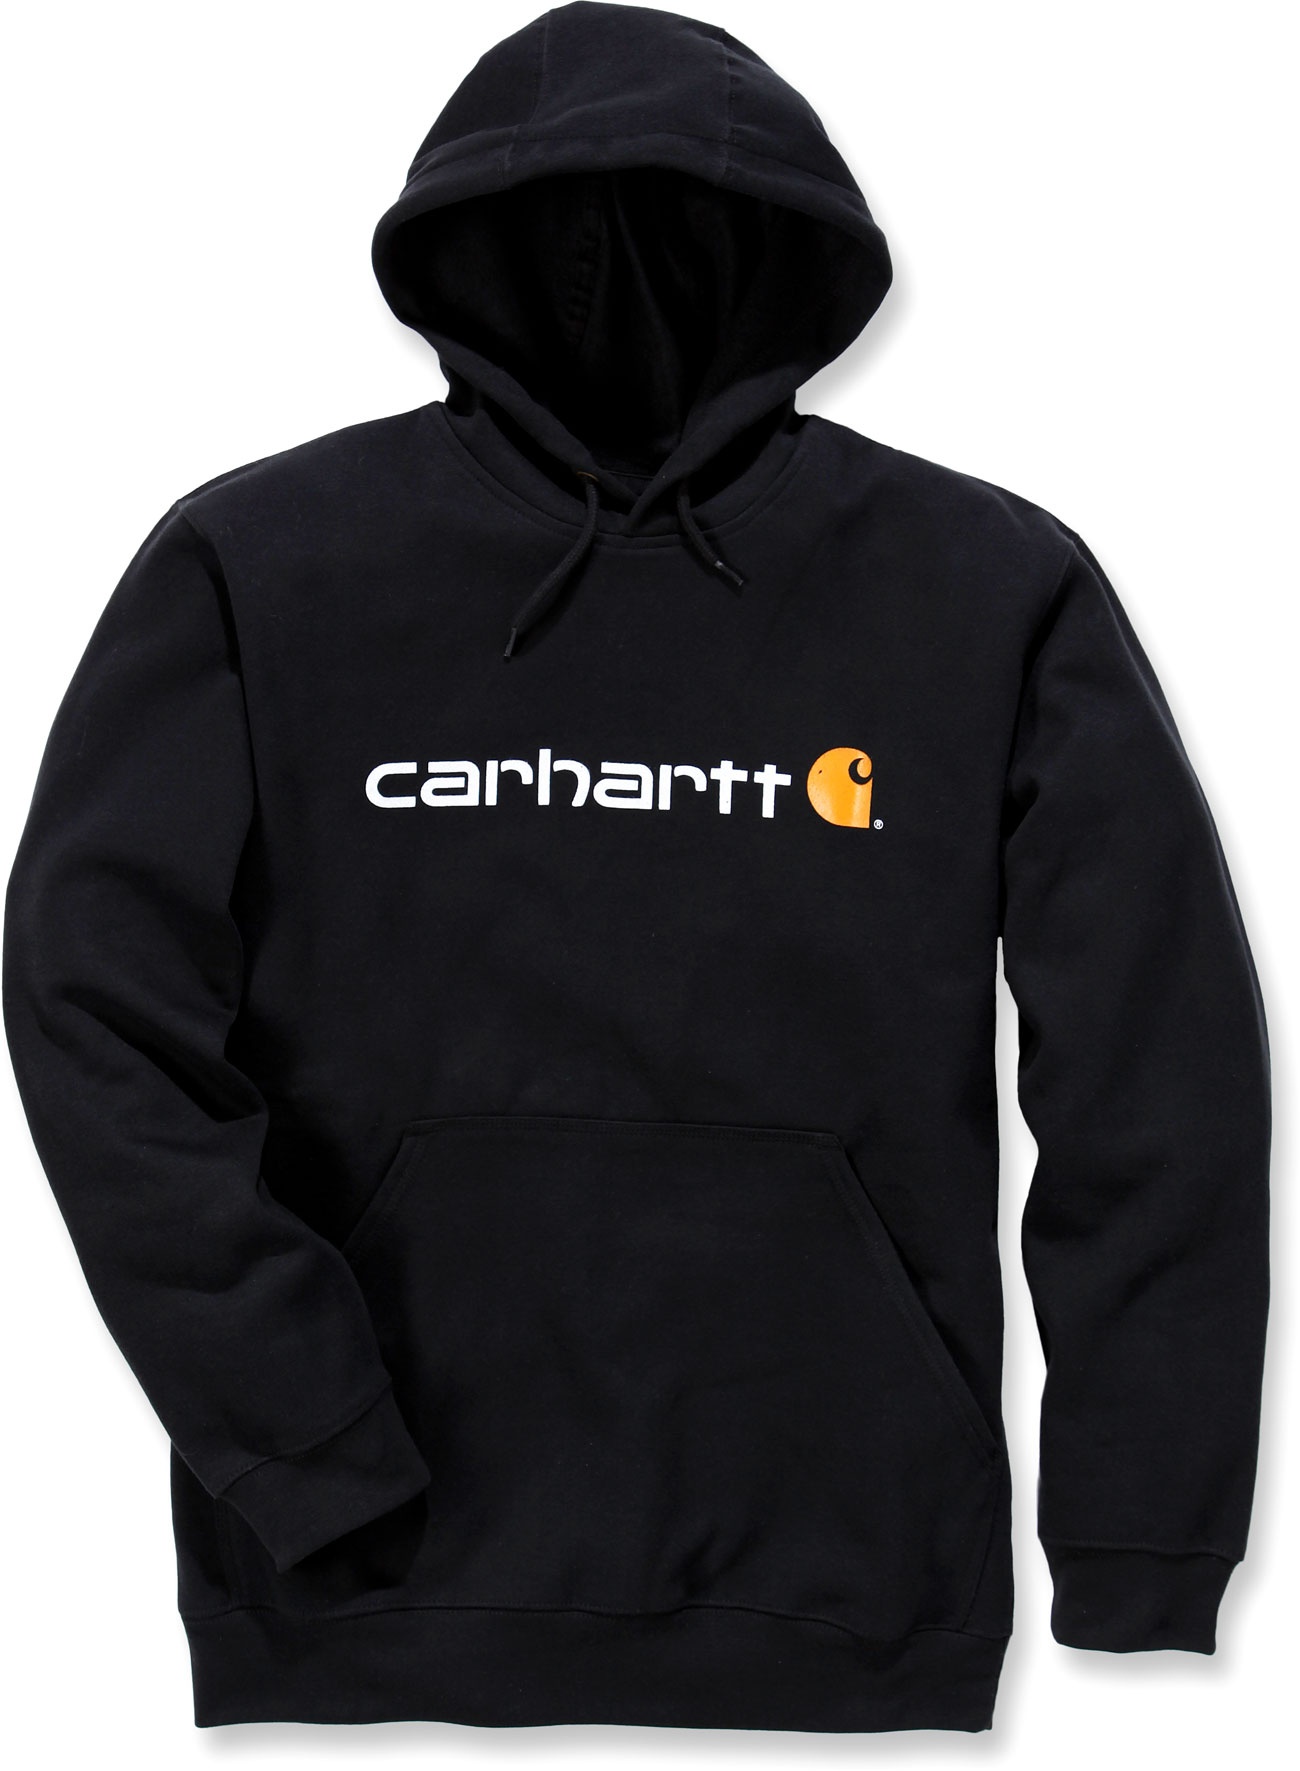 Carhartt Signature Logo, sweat à capuche - Noir - S